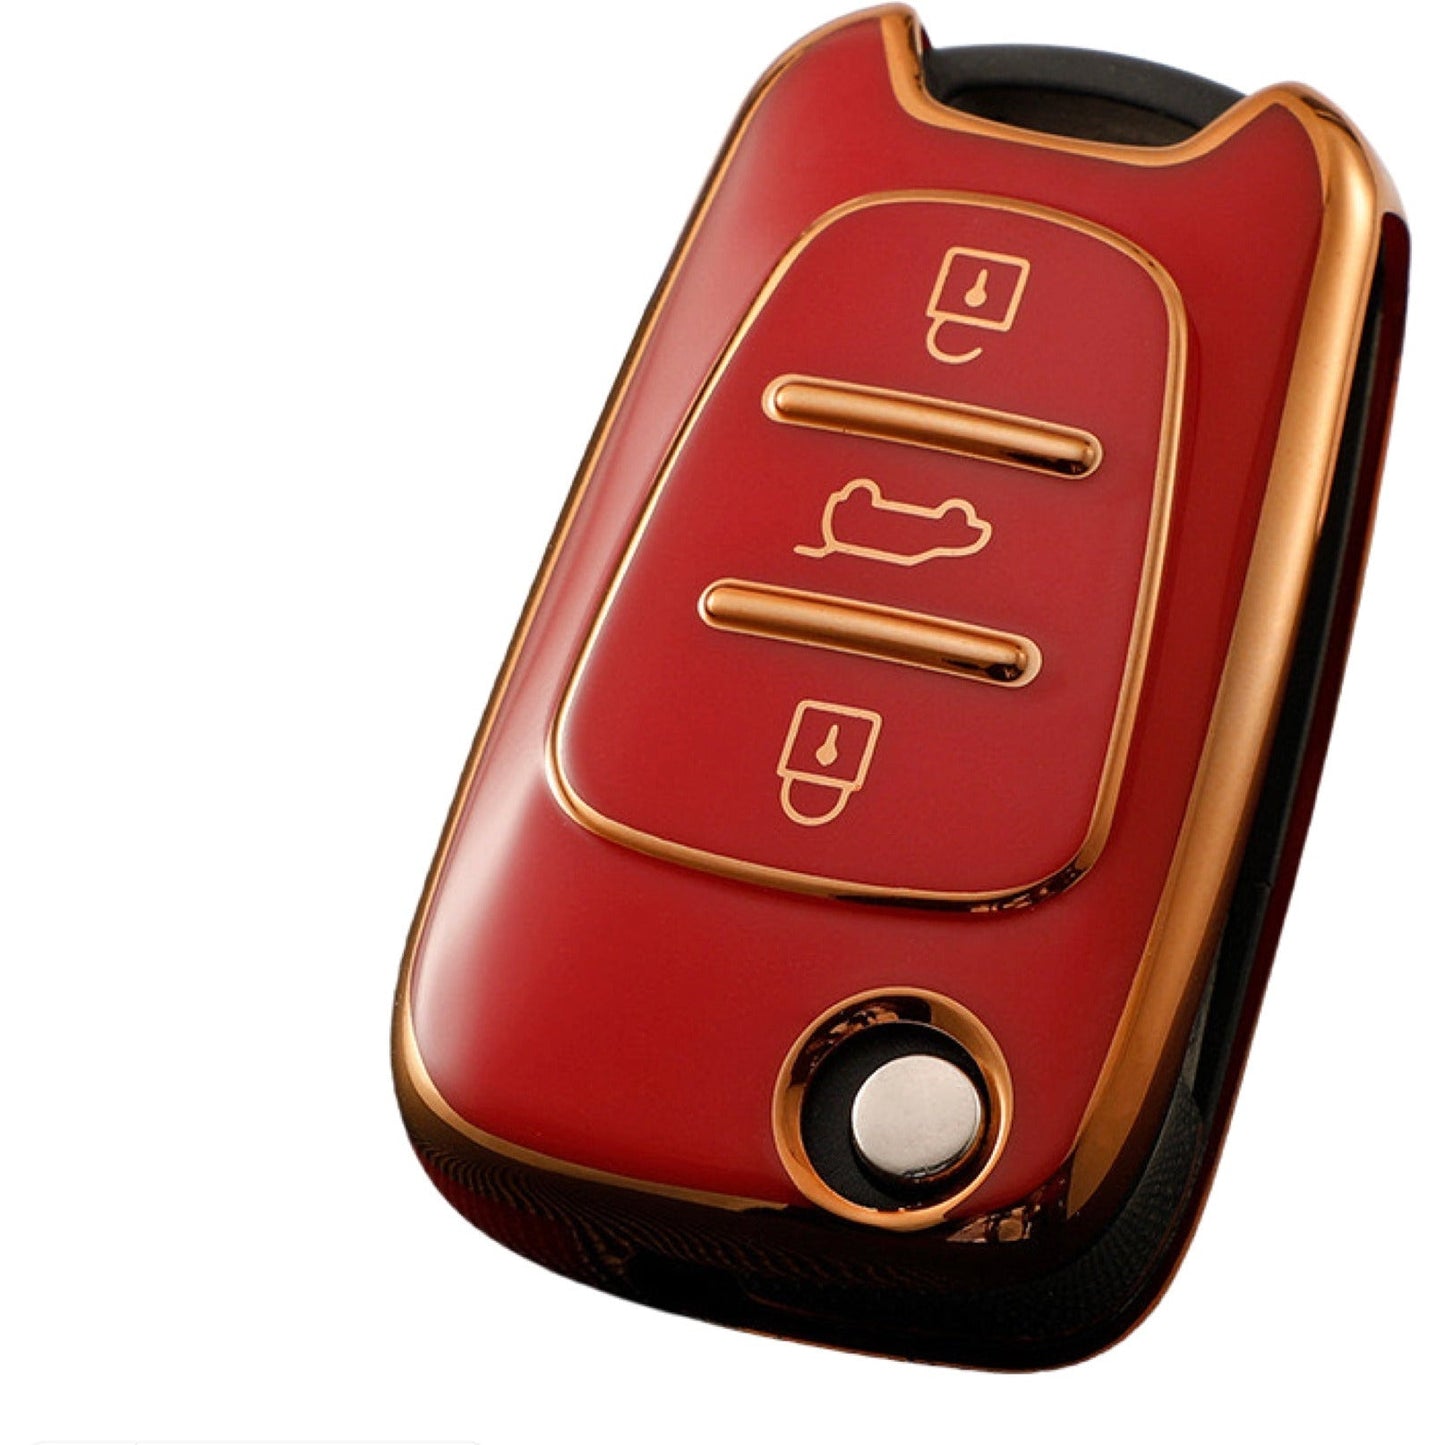 Hyundai key cover red | i20, i30, Elantra, Accent, ix20, ix35 | Hyundai accessories - Keysleeves